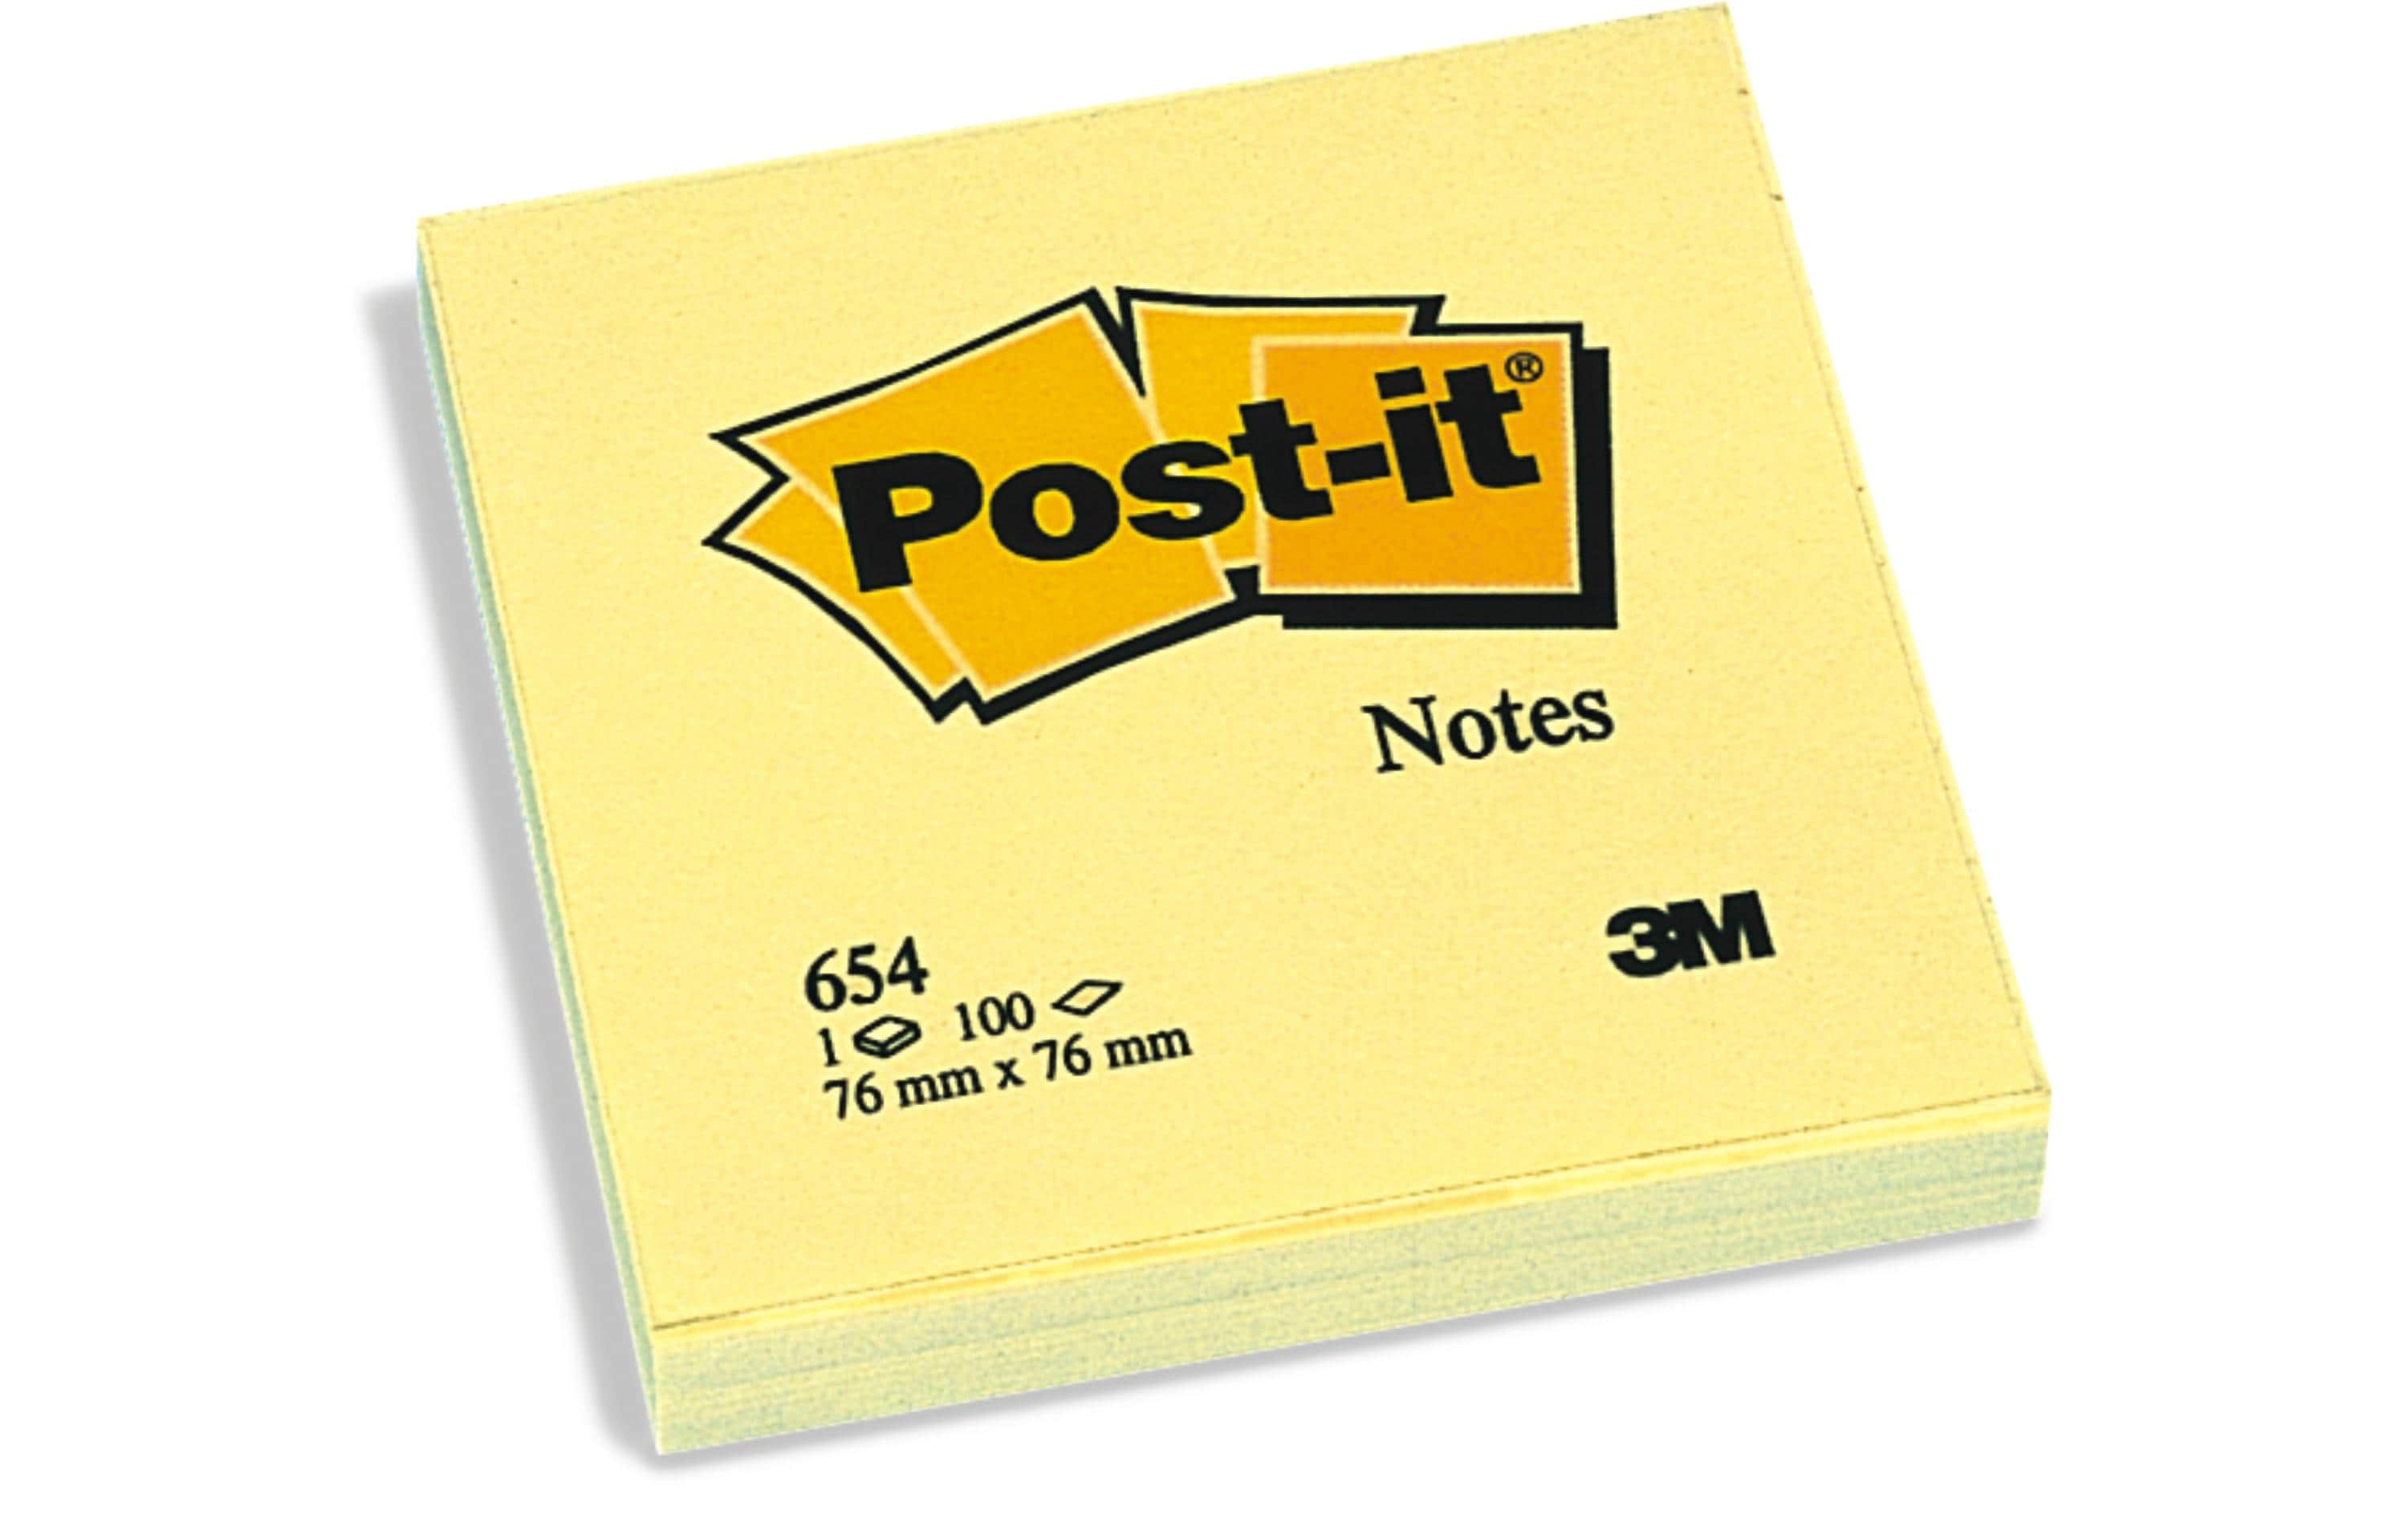 Post-it Notizzettel Post-it 7.6 x 7.6 cm Gelb